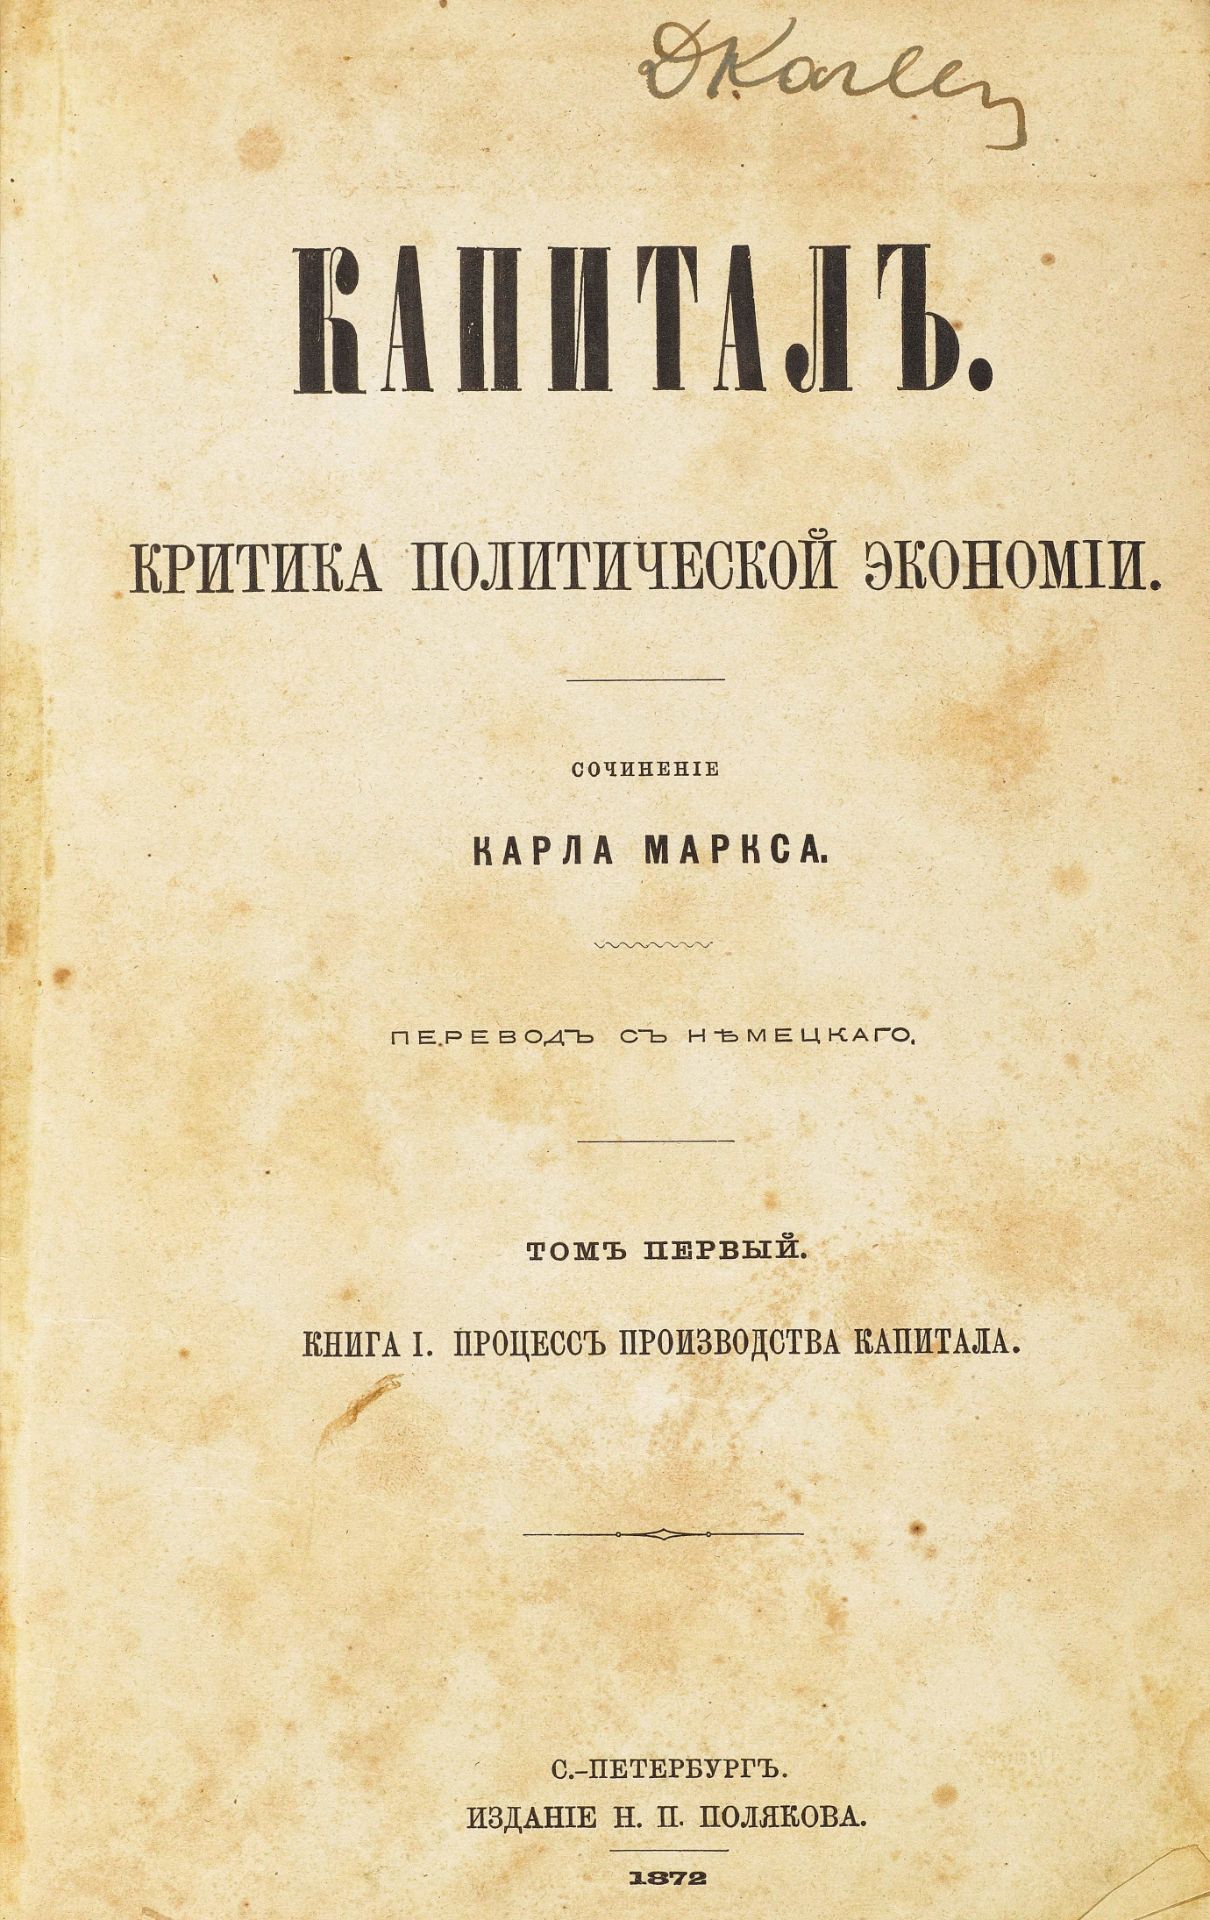 Marx, Karl.Kapital. Kritika Politicheskoi Ekonomii. [Band 1].St. Petersburg, Poliakow, 1872. [1]